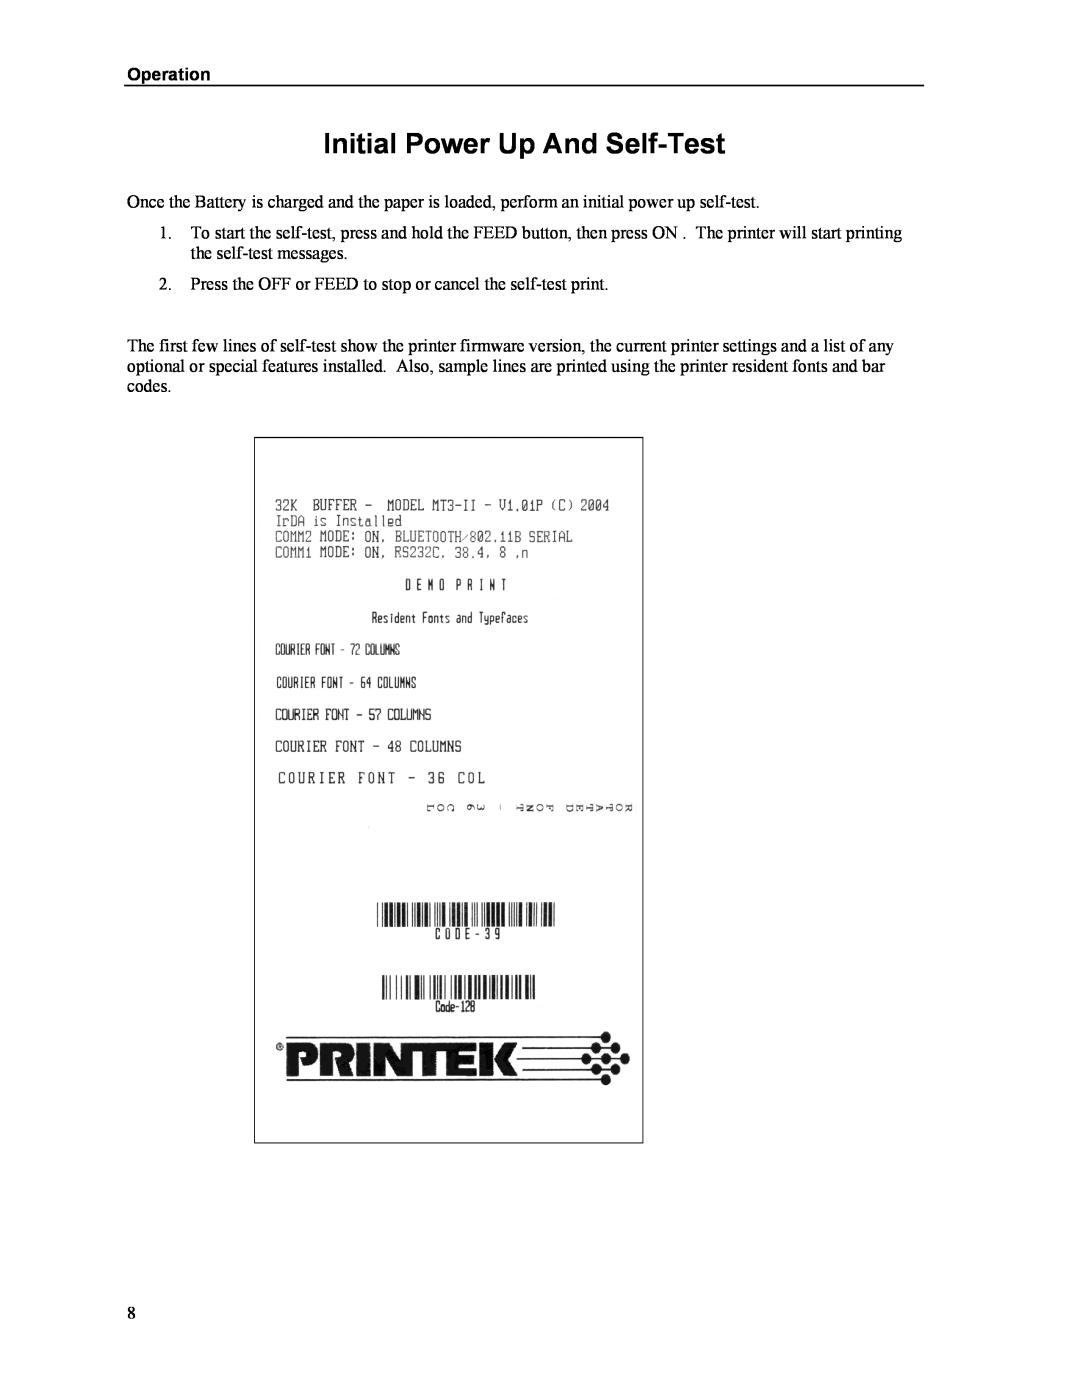 Printek Mt3-II manual Initial Power Up And Self-Test, Operation 